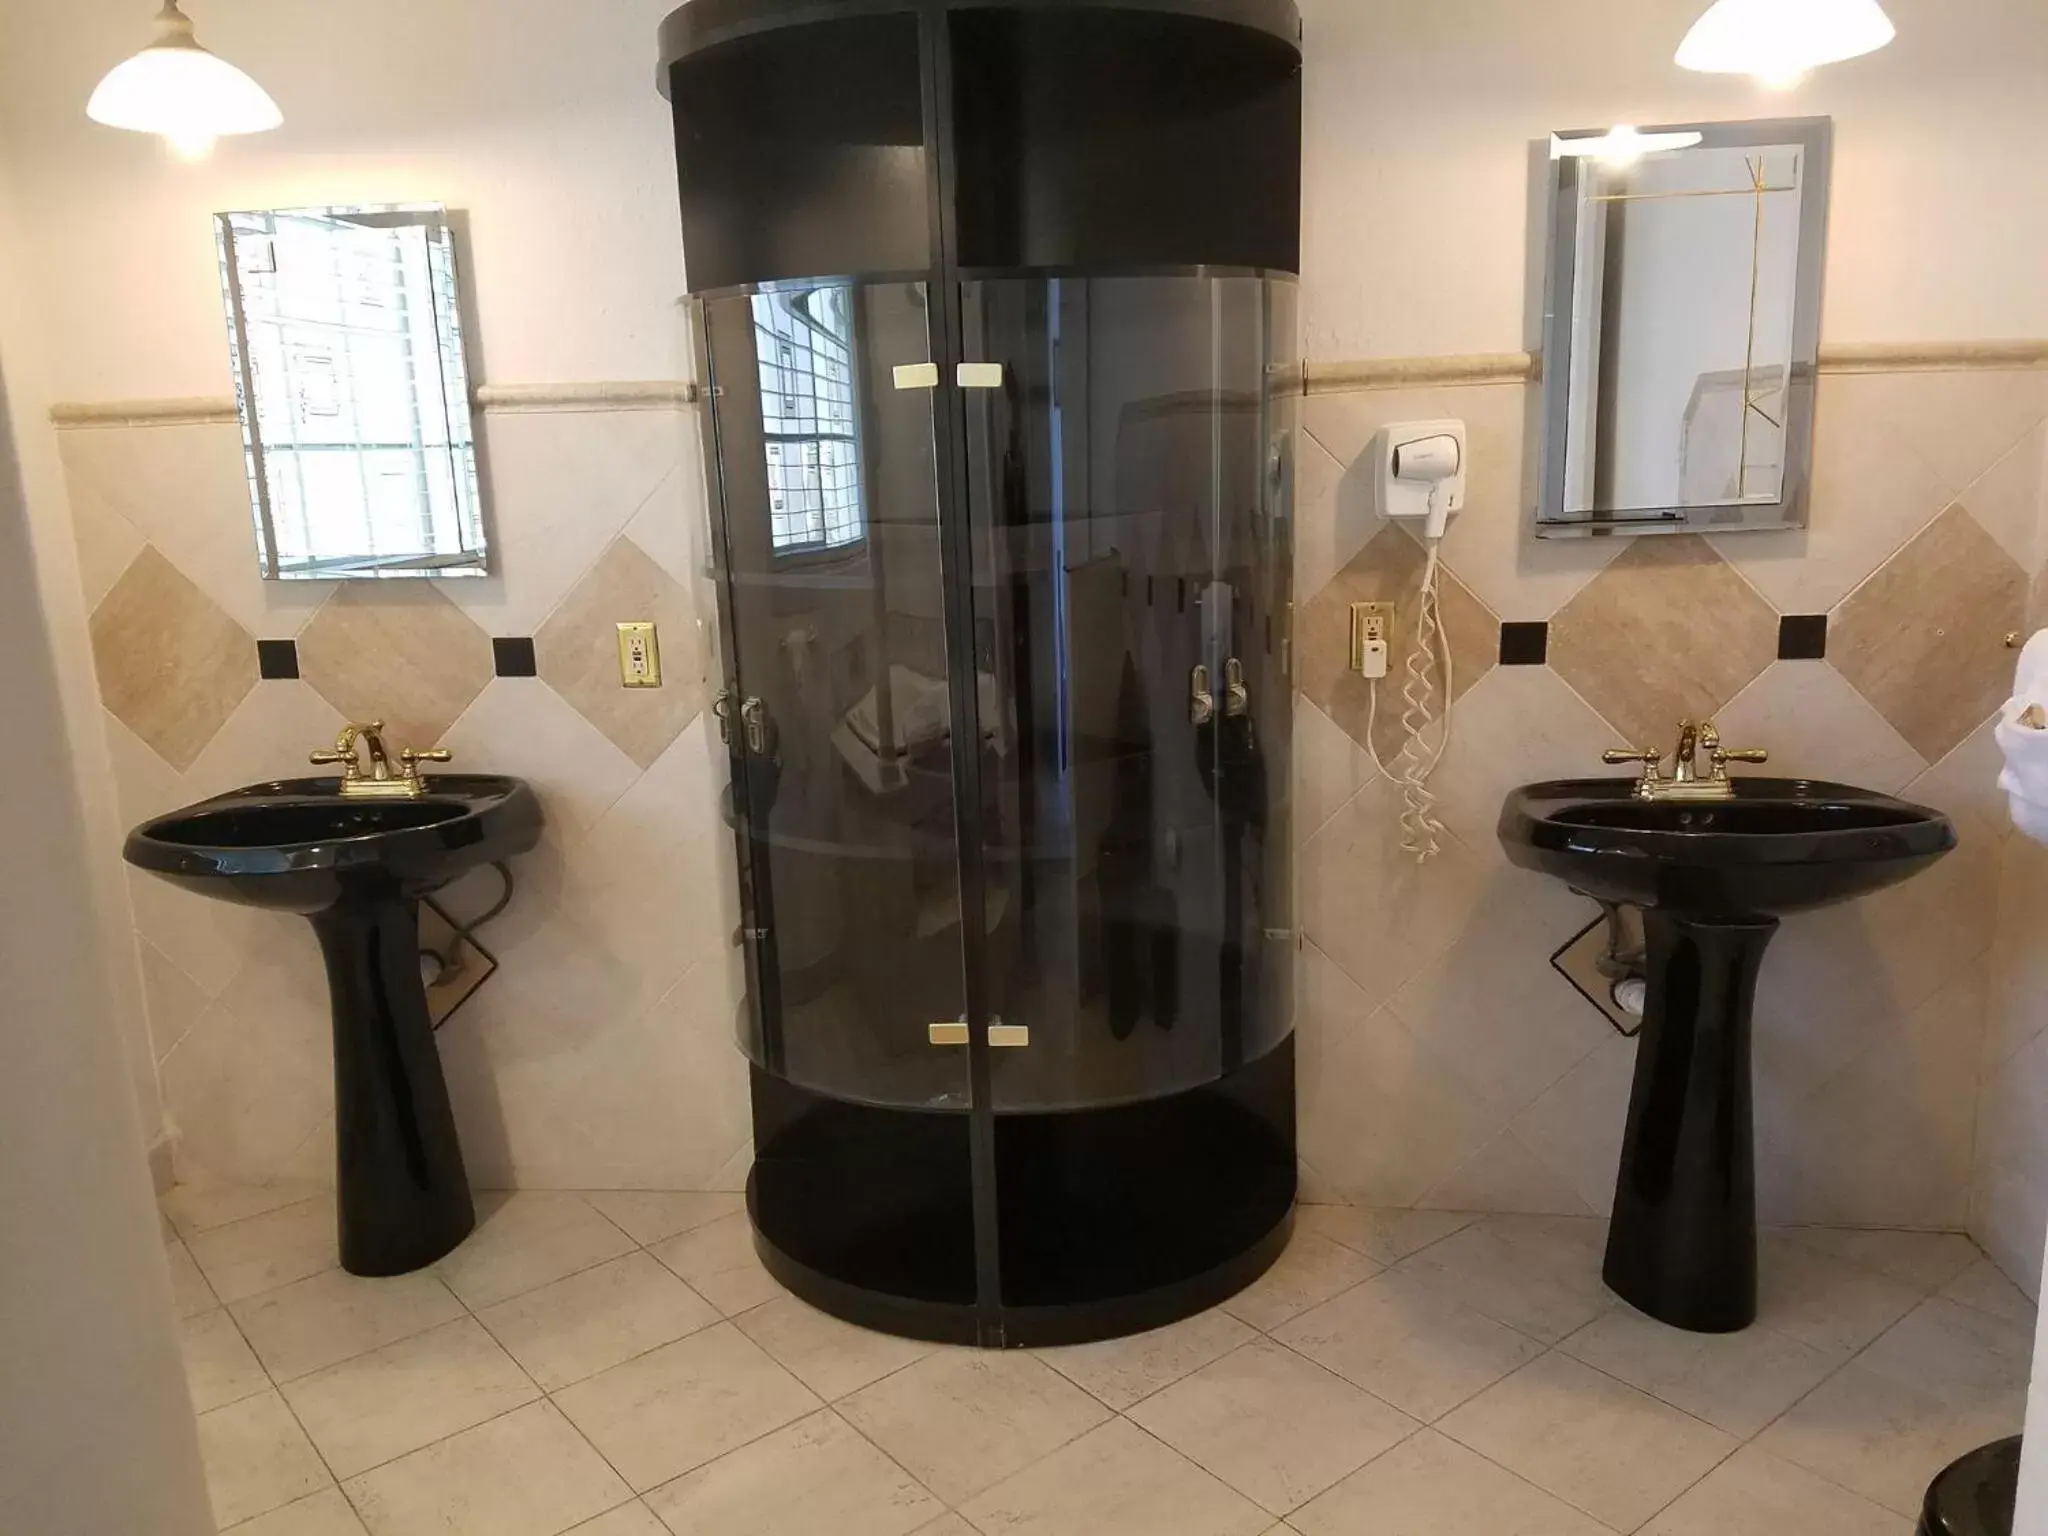 Bathroom in Blind Pass Resort Motel